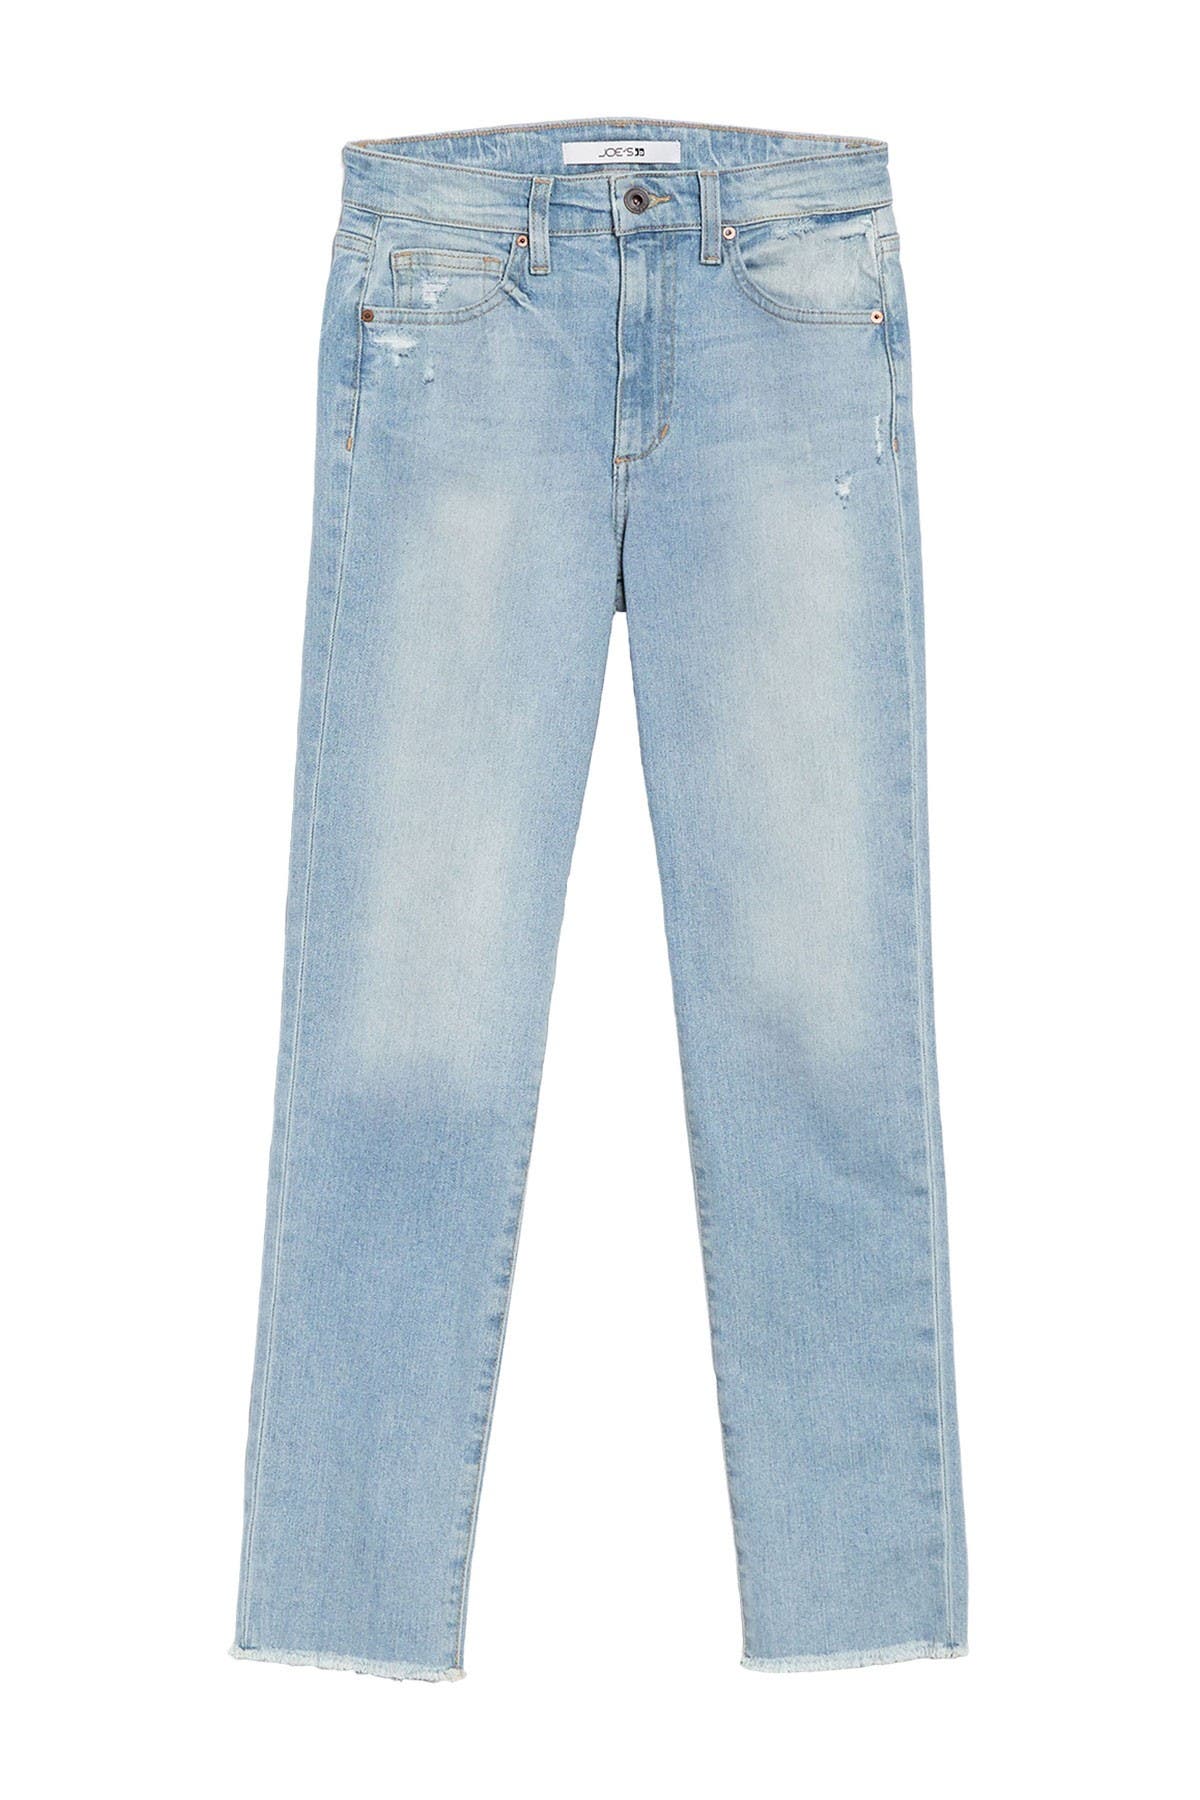 nordstrom rack joe's jeans